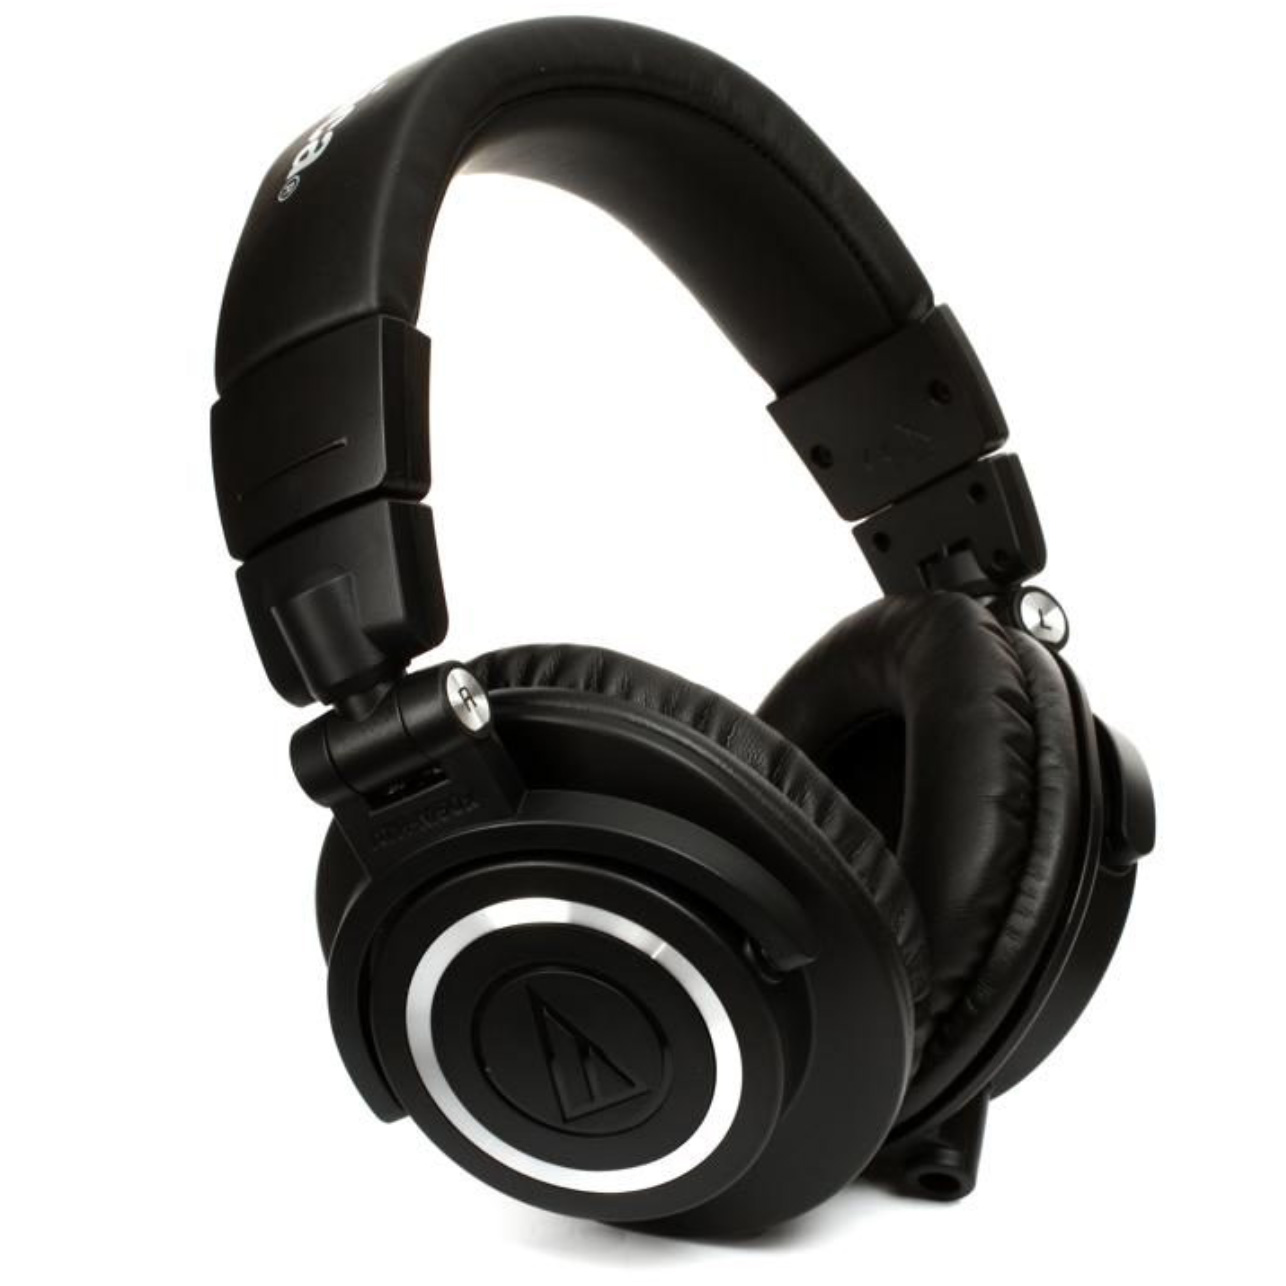 ATH-M50x Closed-back Studio Monitoring Headphones